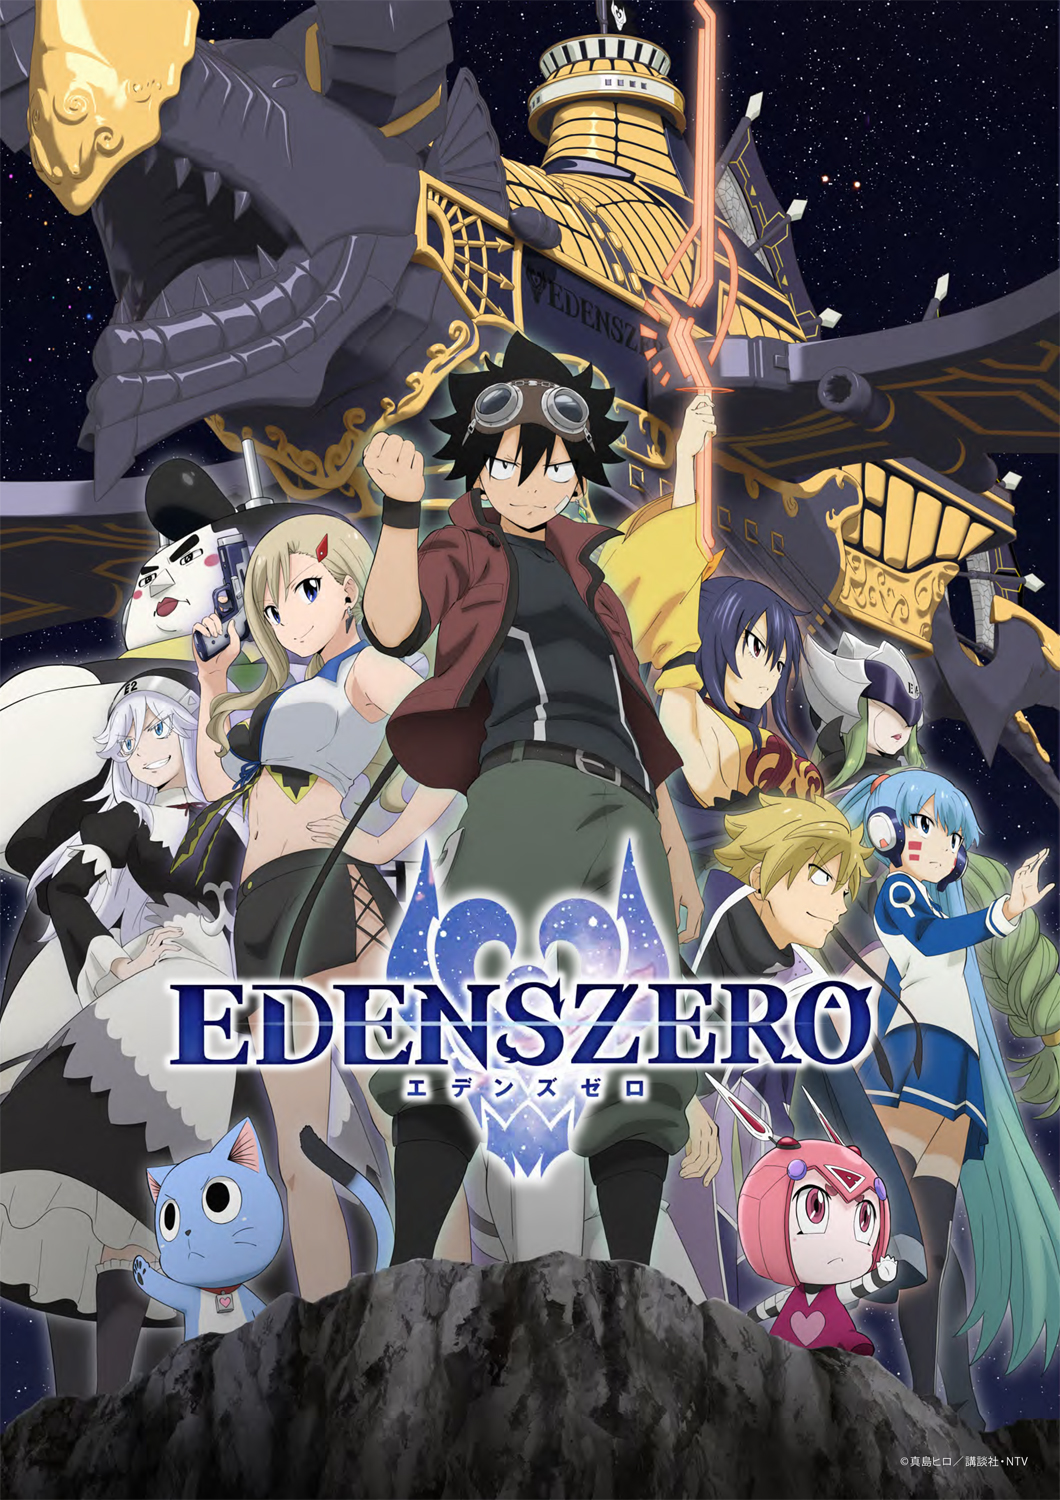 Edens Zero - Wikipedia